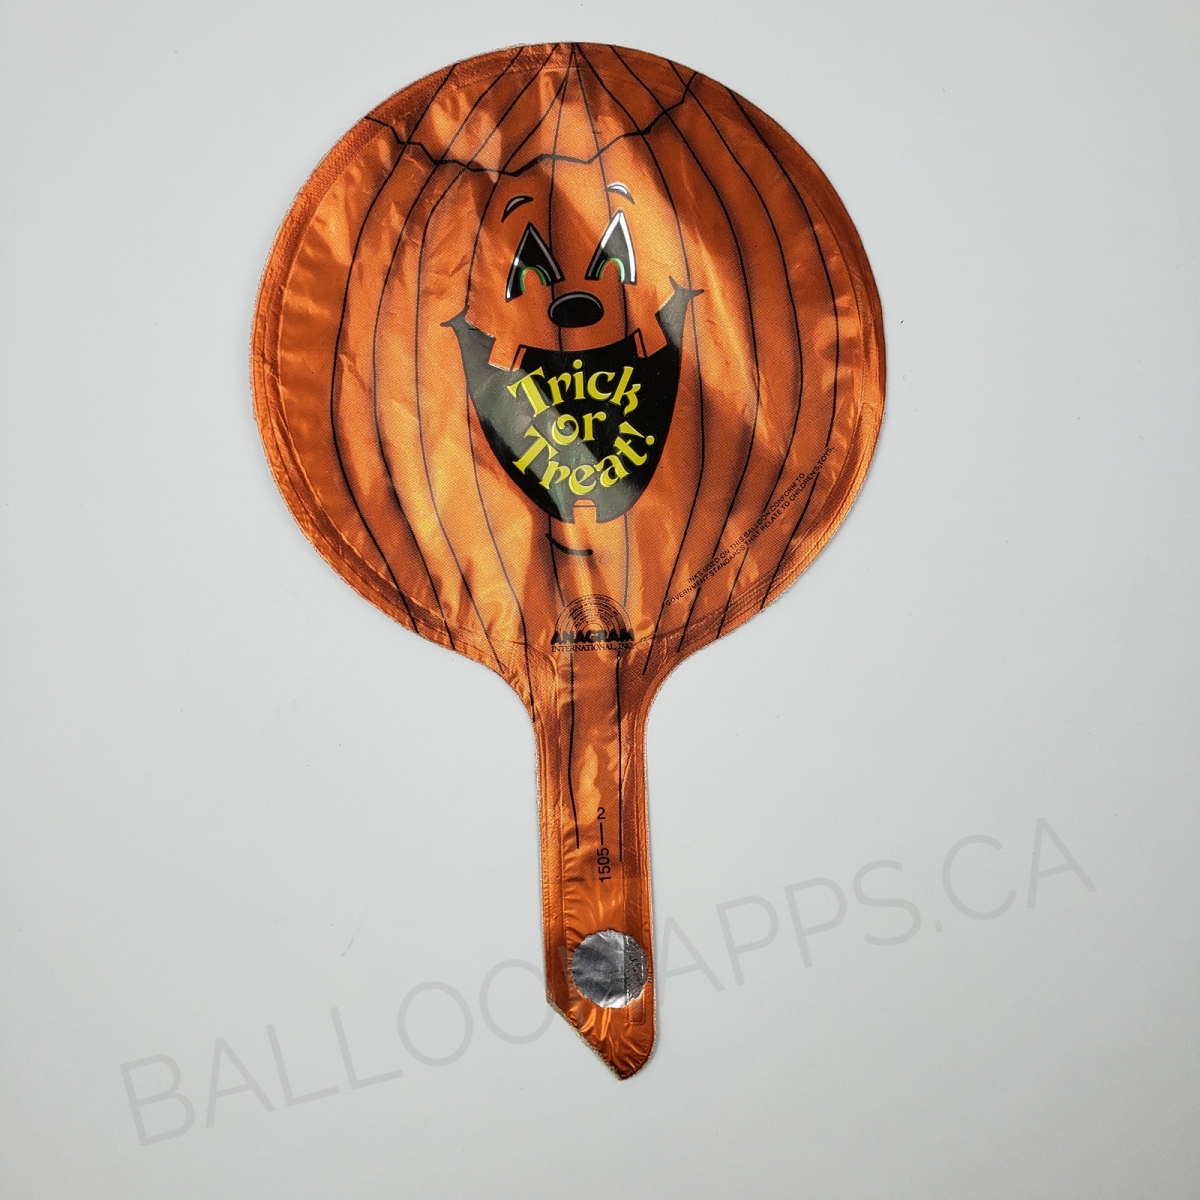 H - 4" Foil - Halloween Pumpkin Trick or Treat balloon